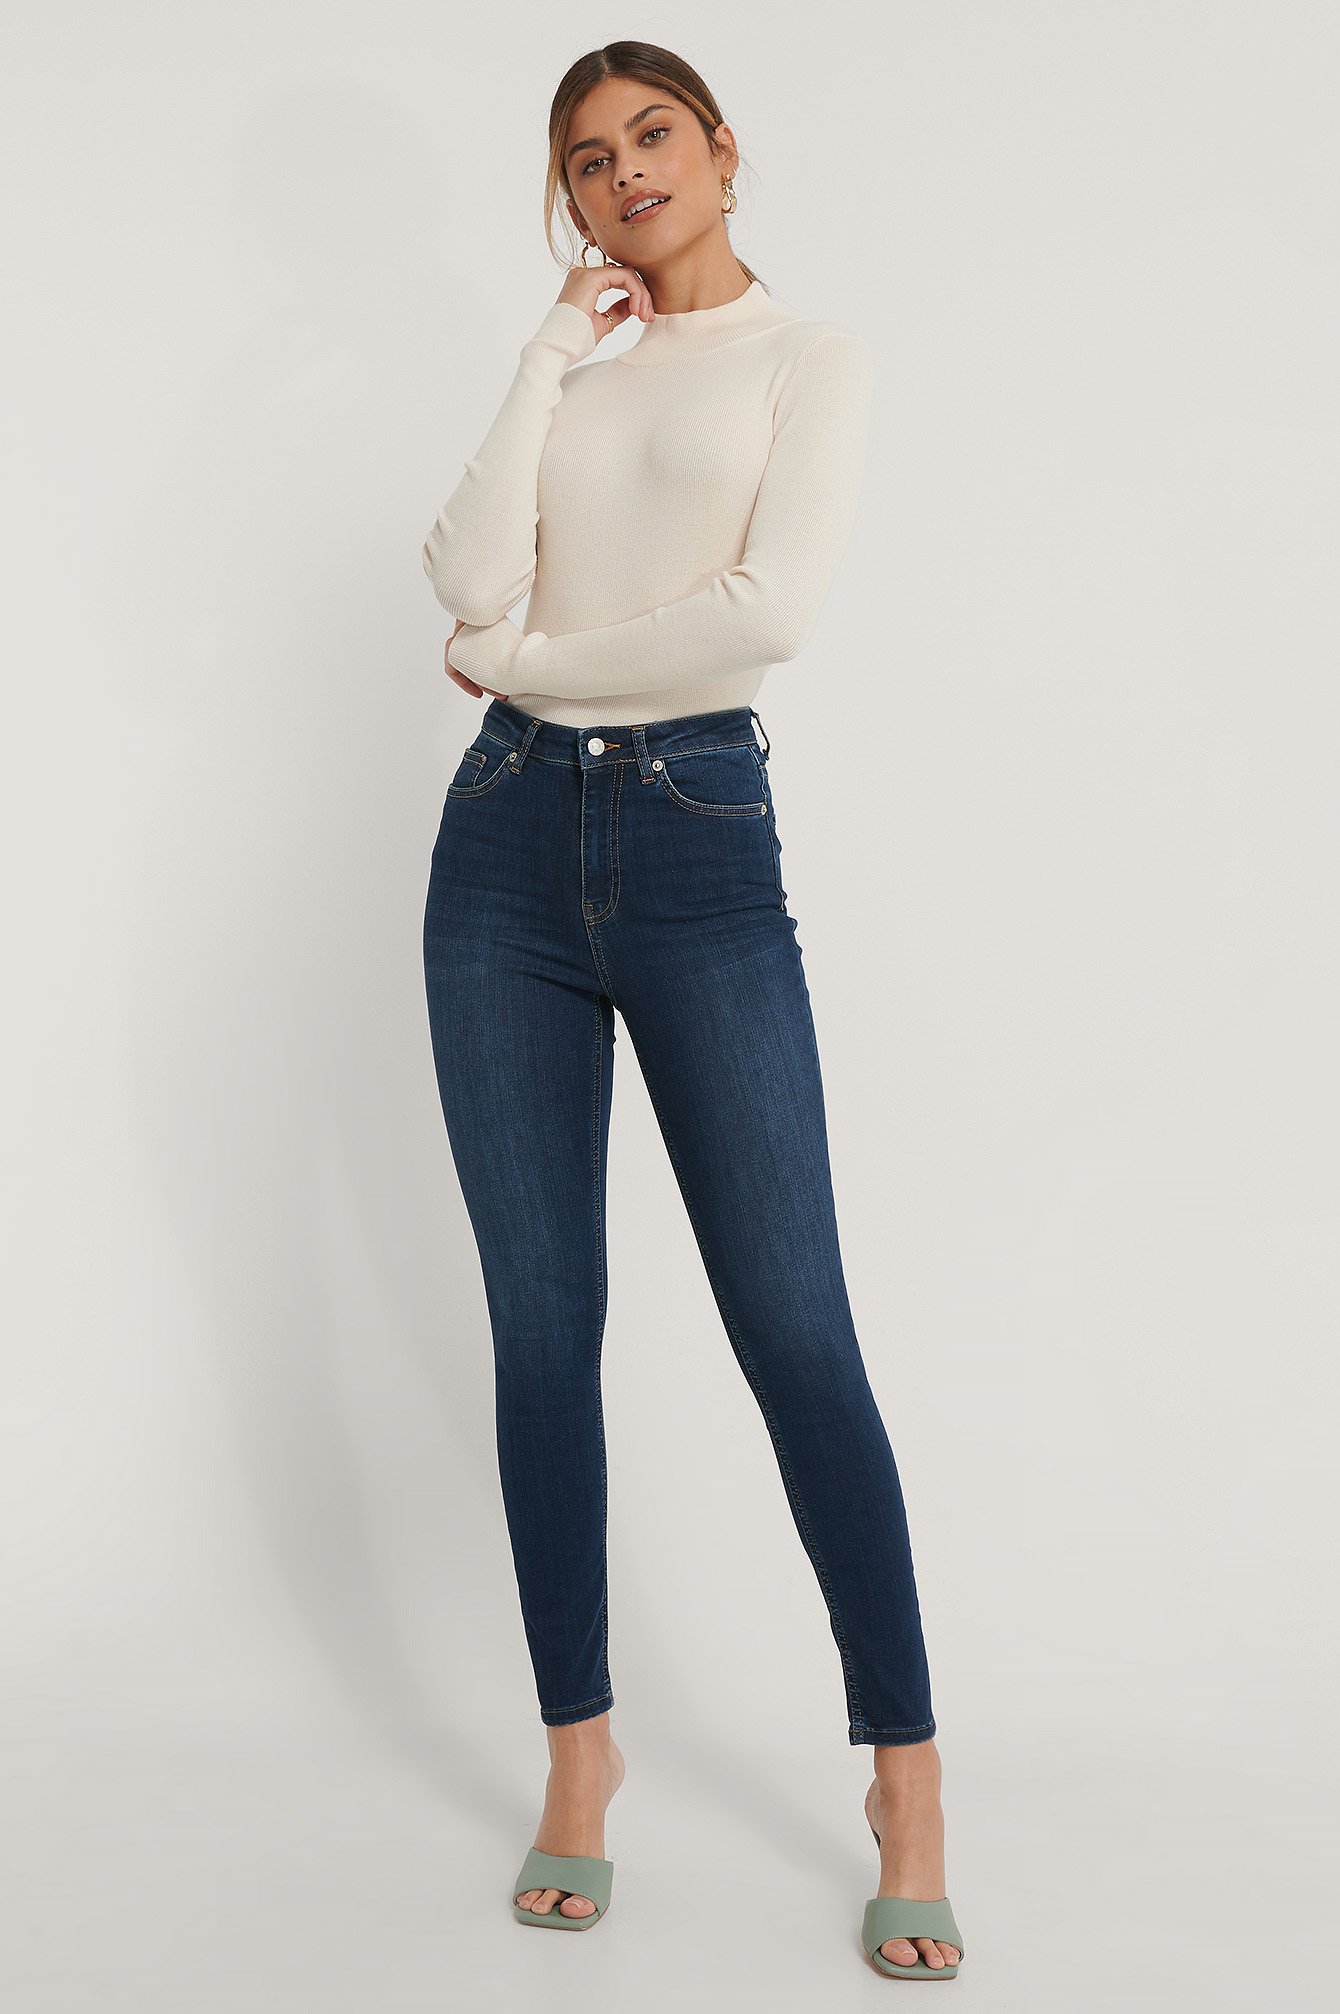 Damen Kleidung Jeans Jeans mit hoher Taille Collusion Jeans mit hoher Taille Skinny Jeans 